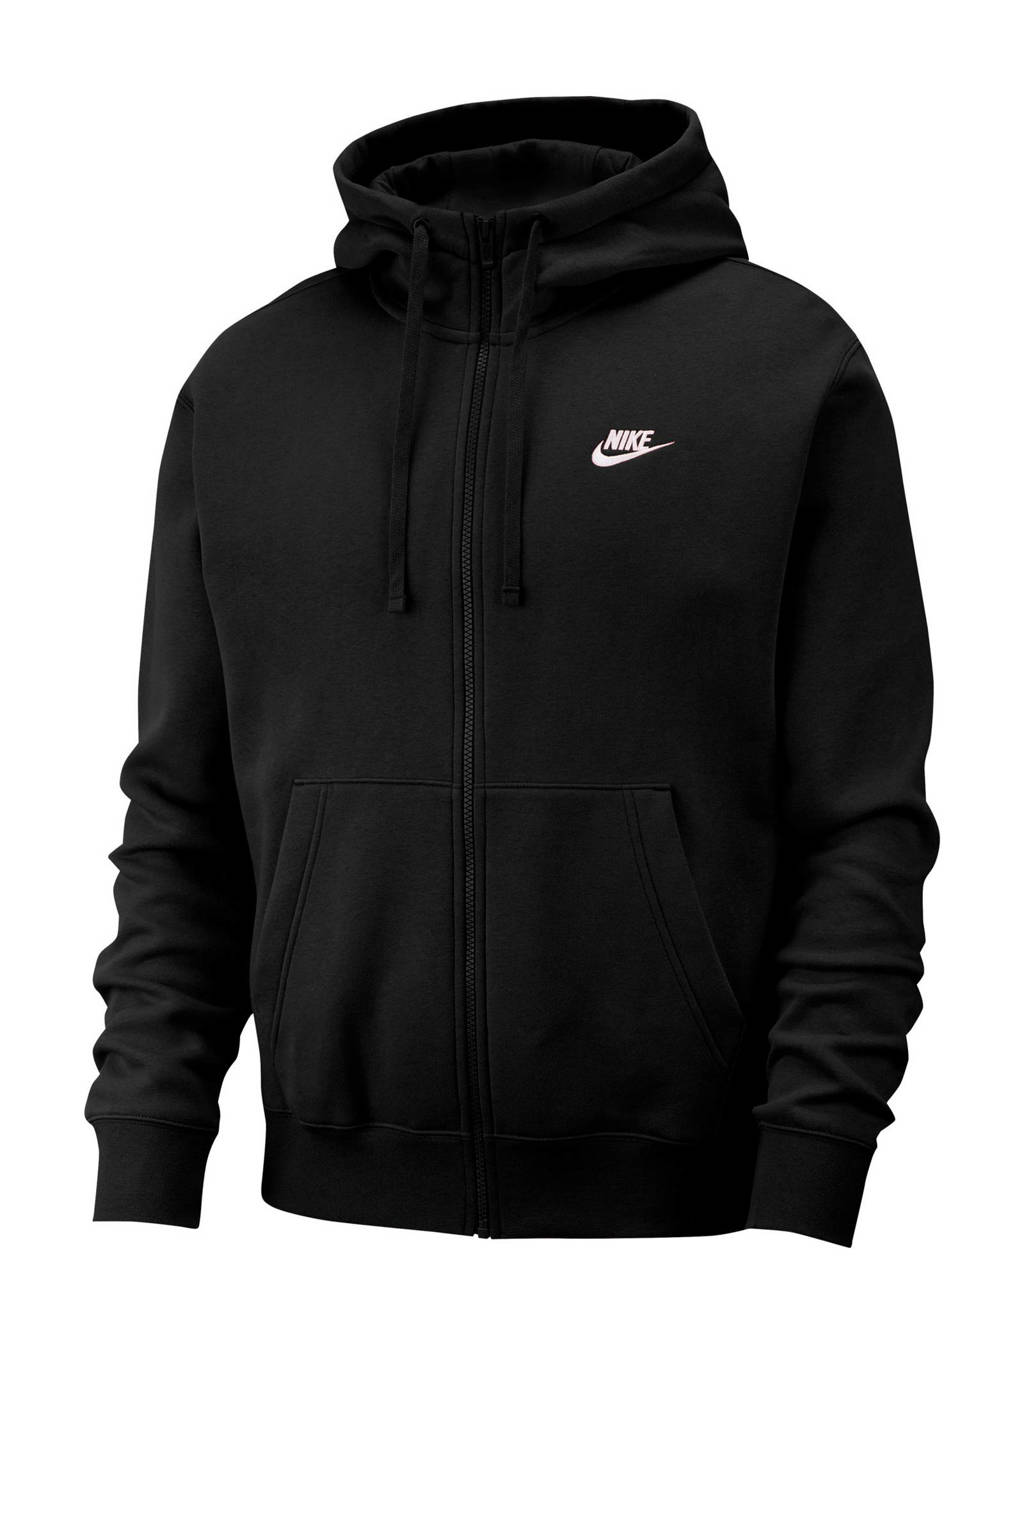 Nike vest zwart